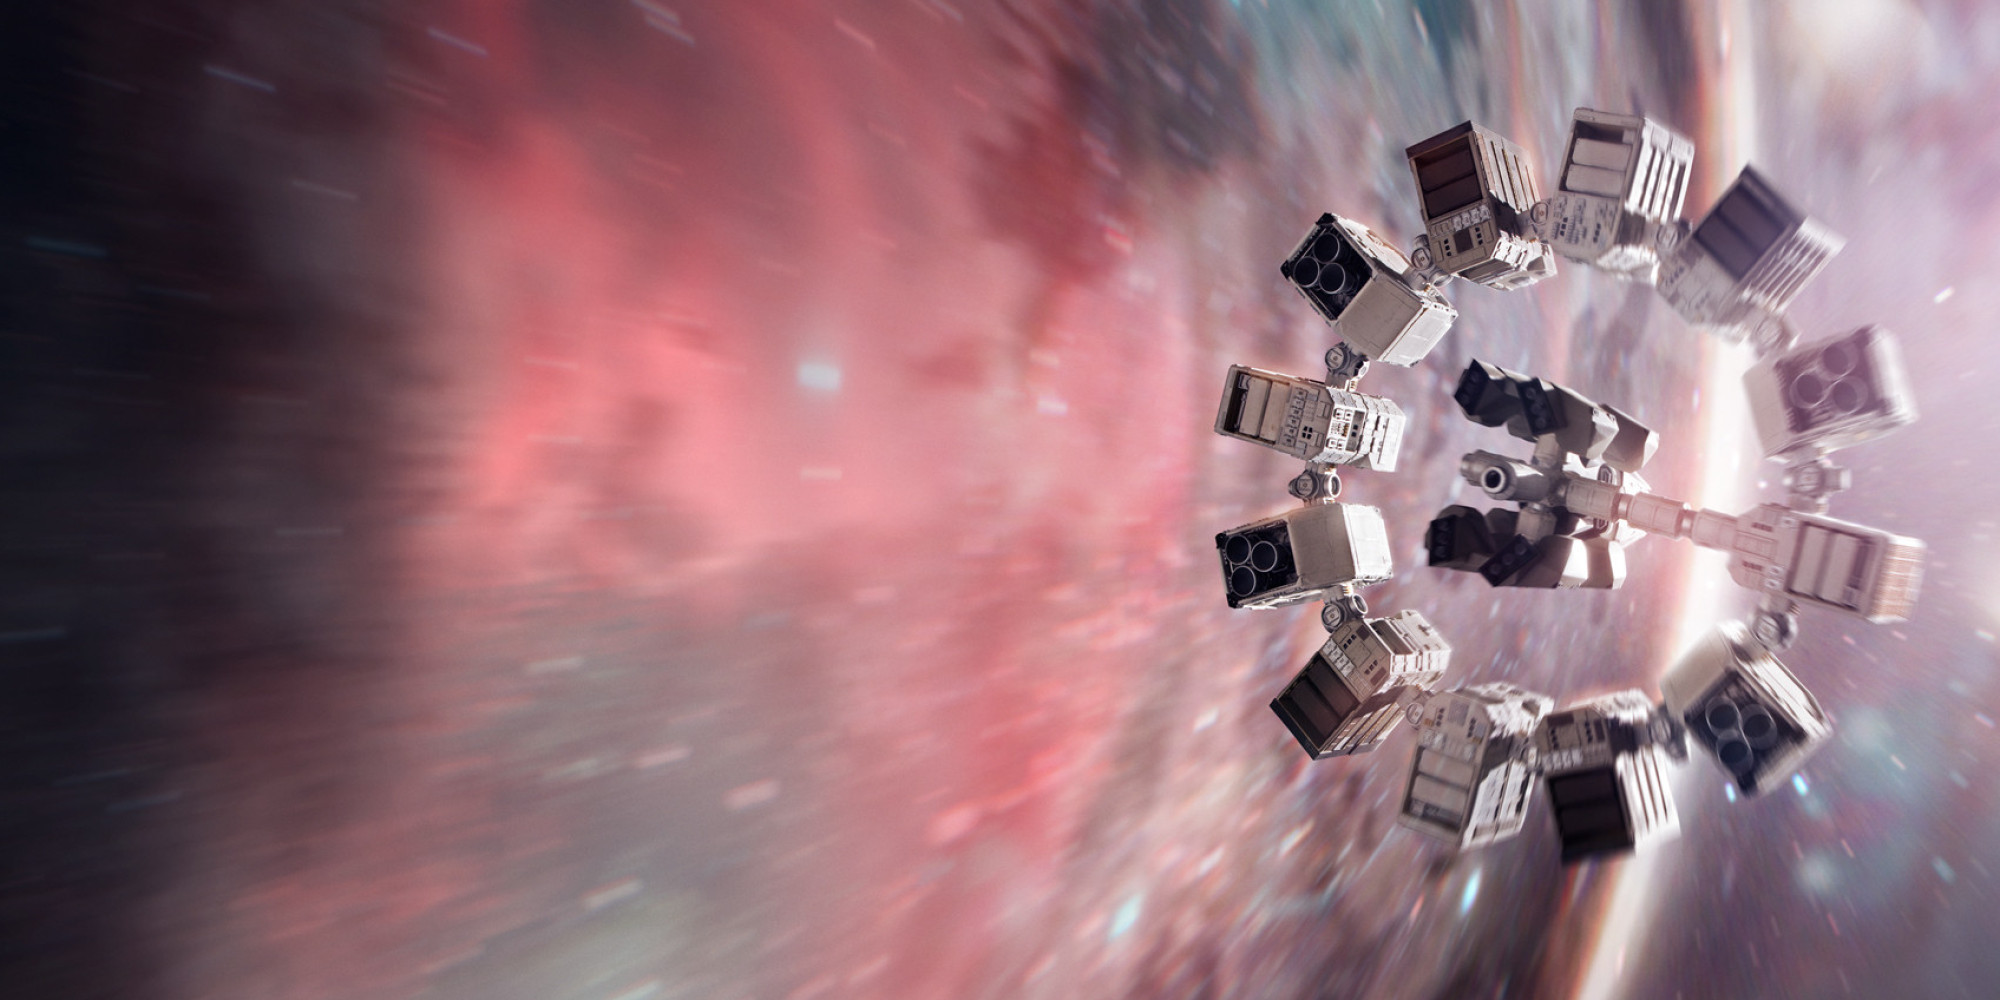 Interstellar: A Masterpiece (or no more comforting lies)